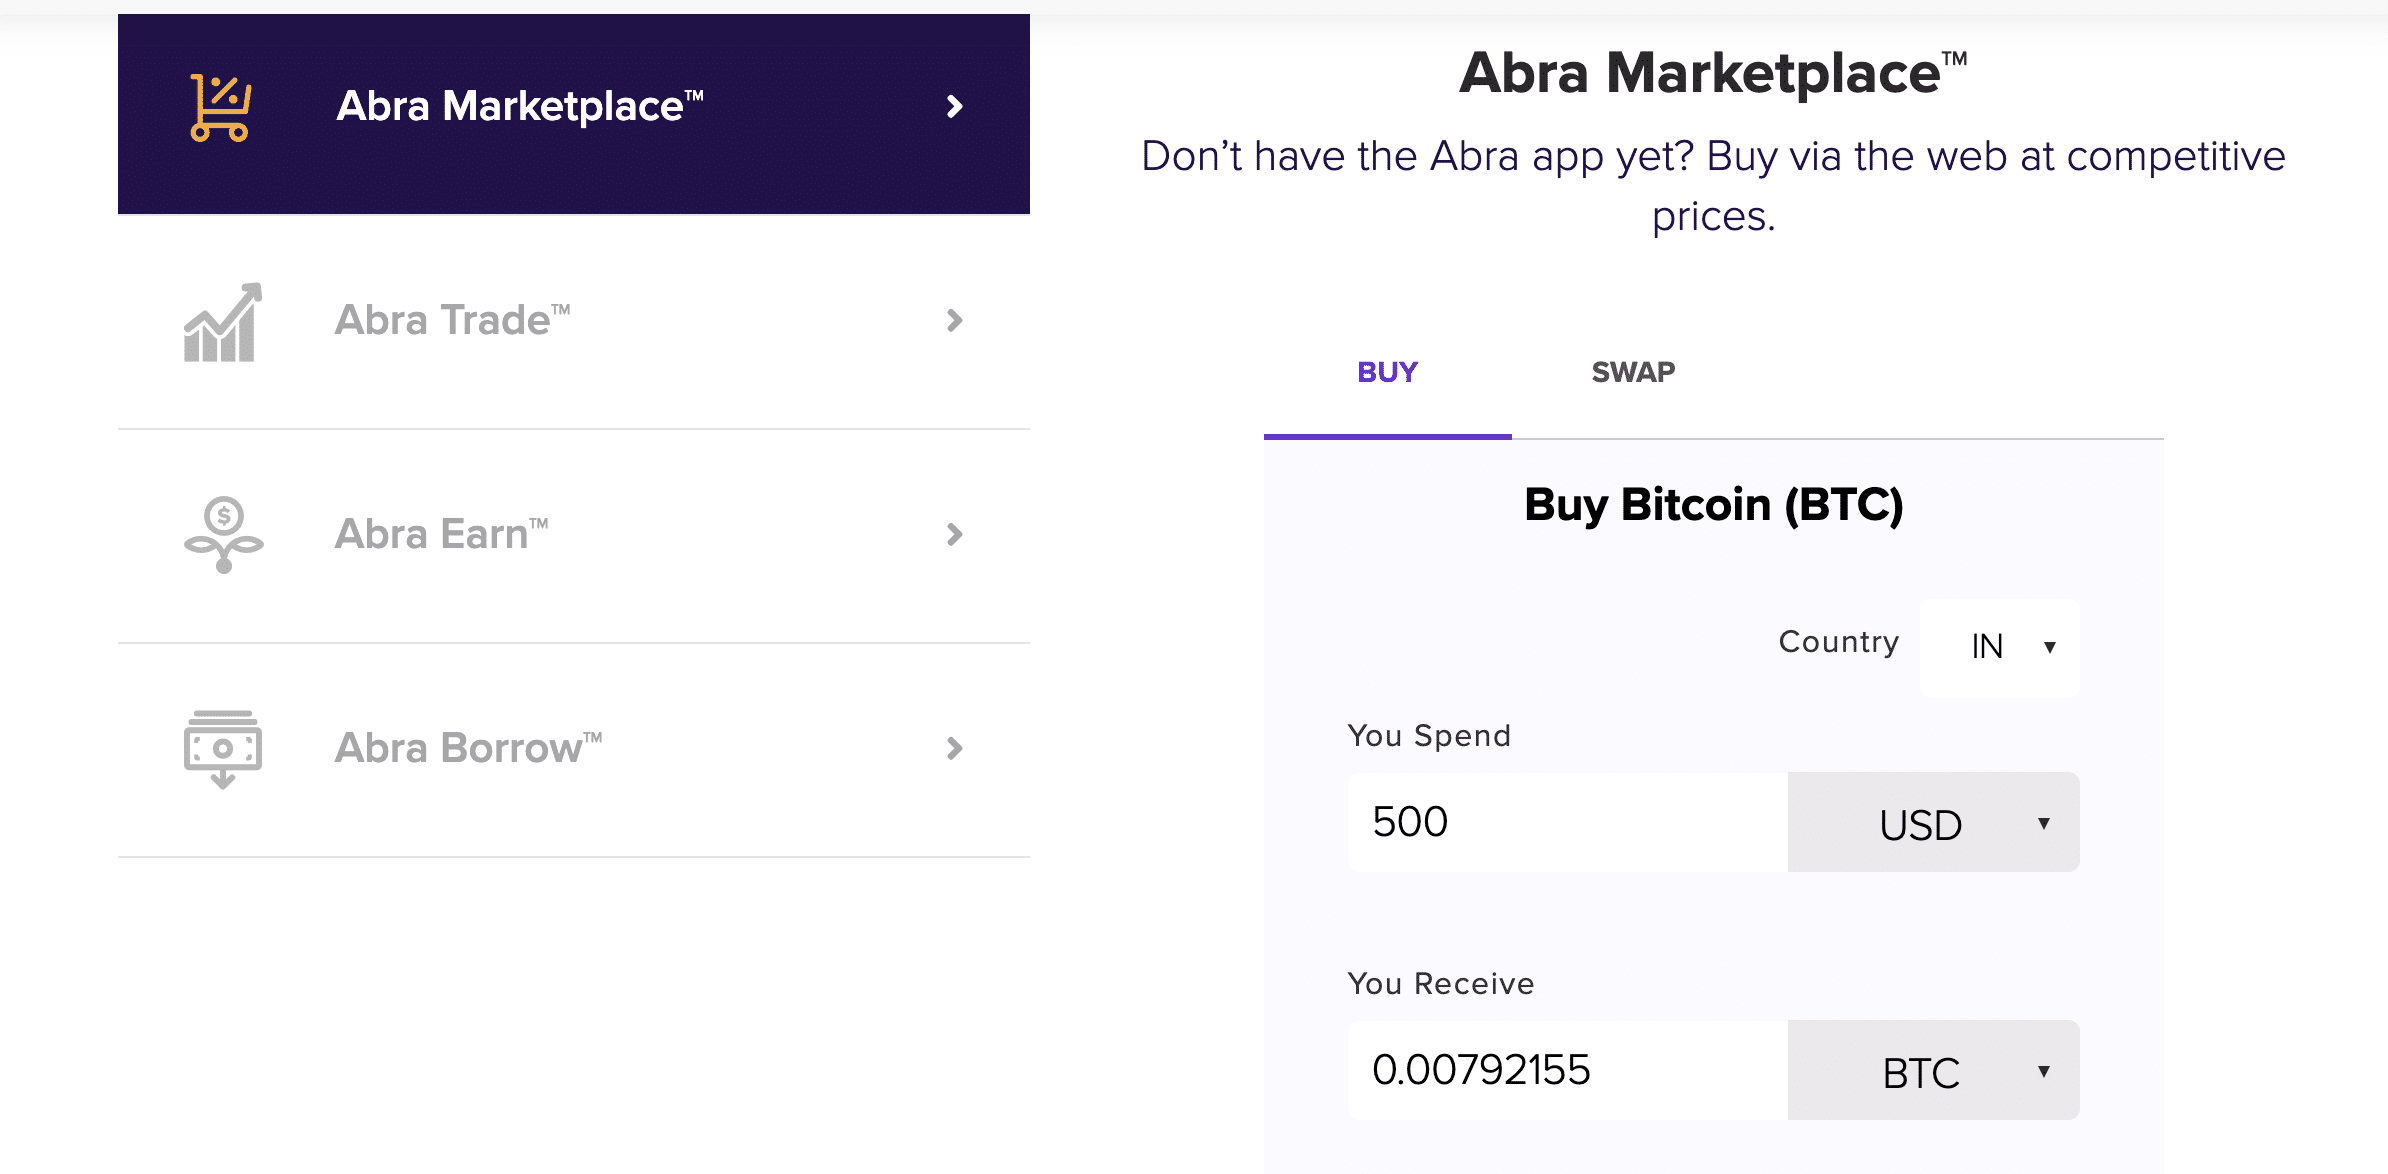 Abra Marketplace